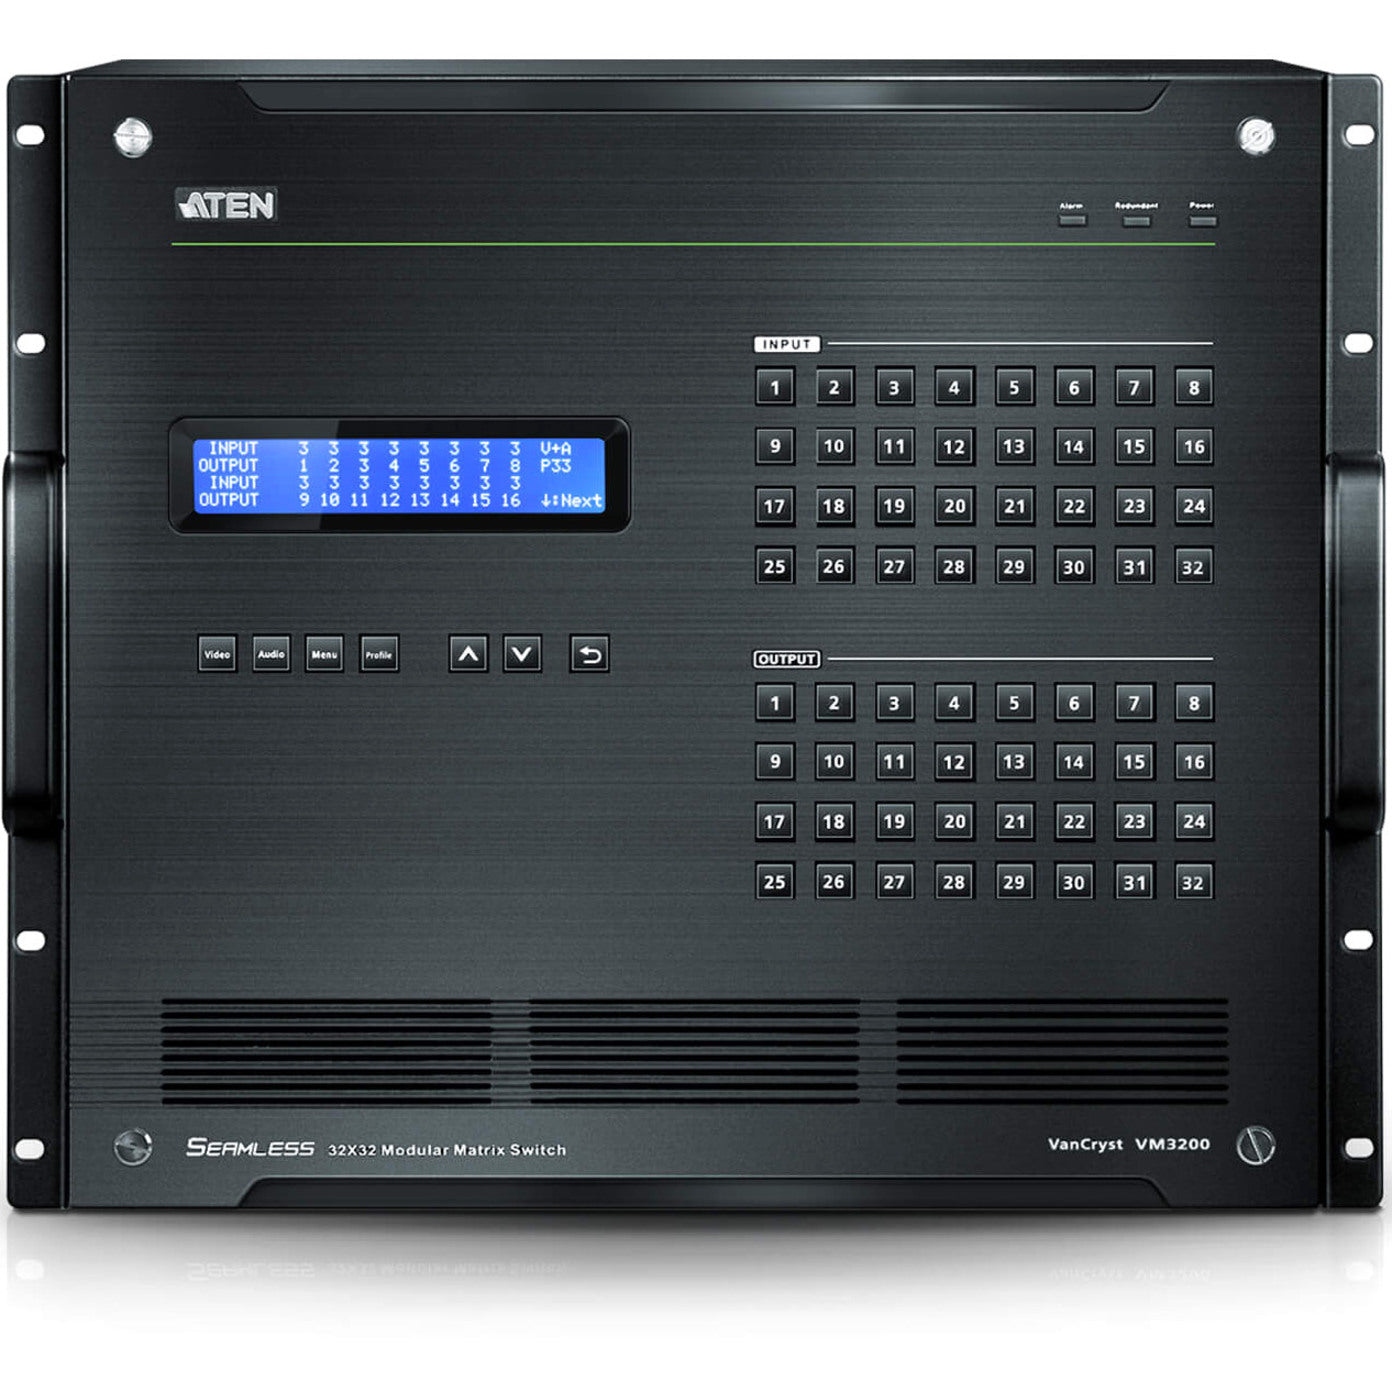 ATEN 32x32 Modular Matrix Switch-TAA Compliant